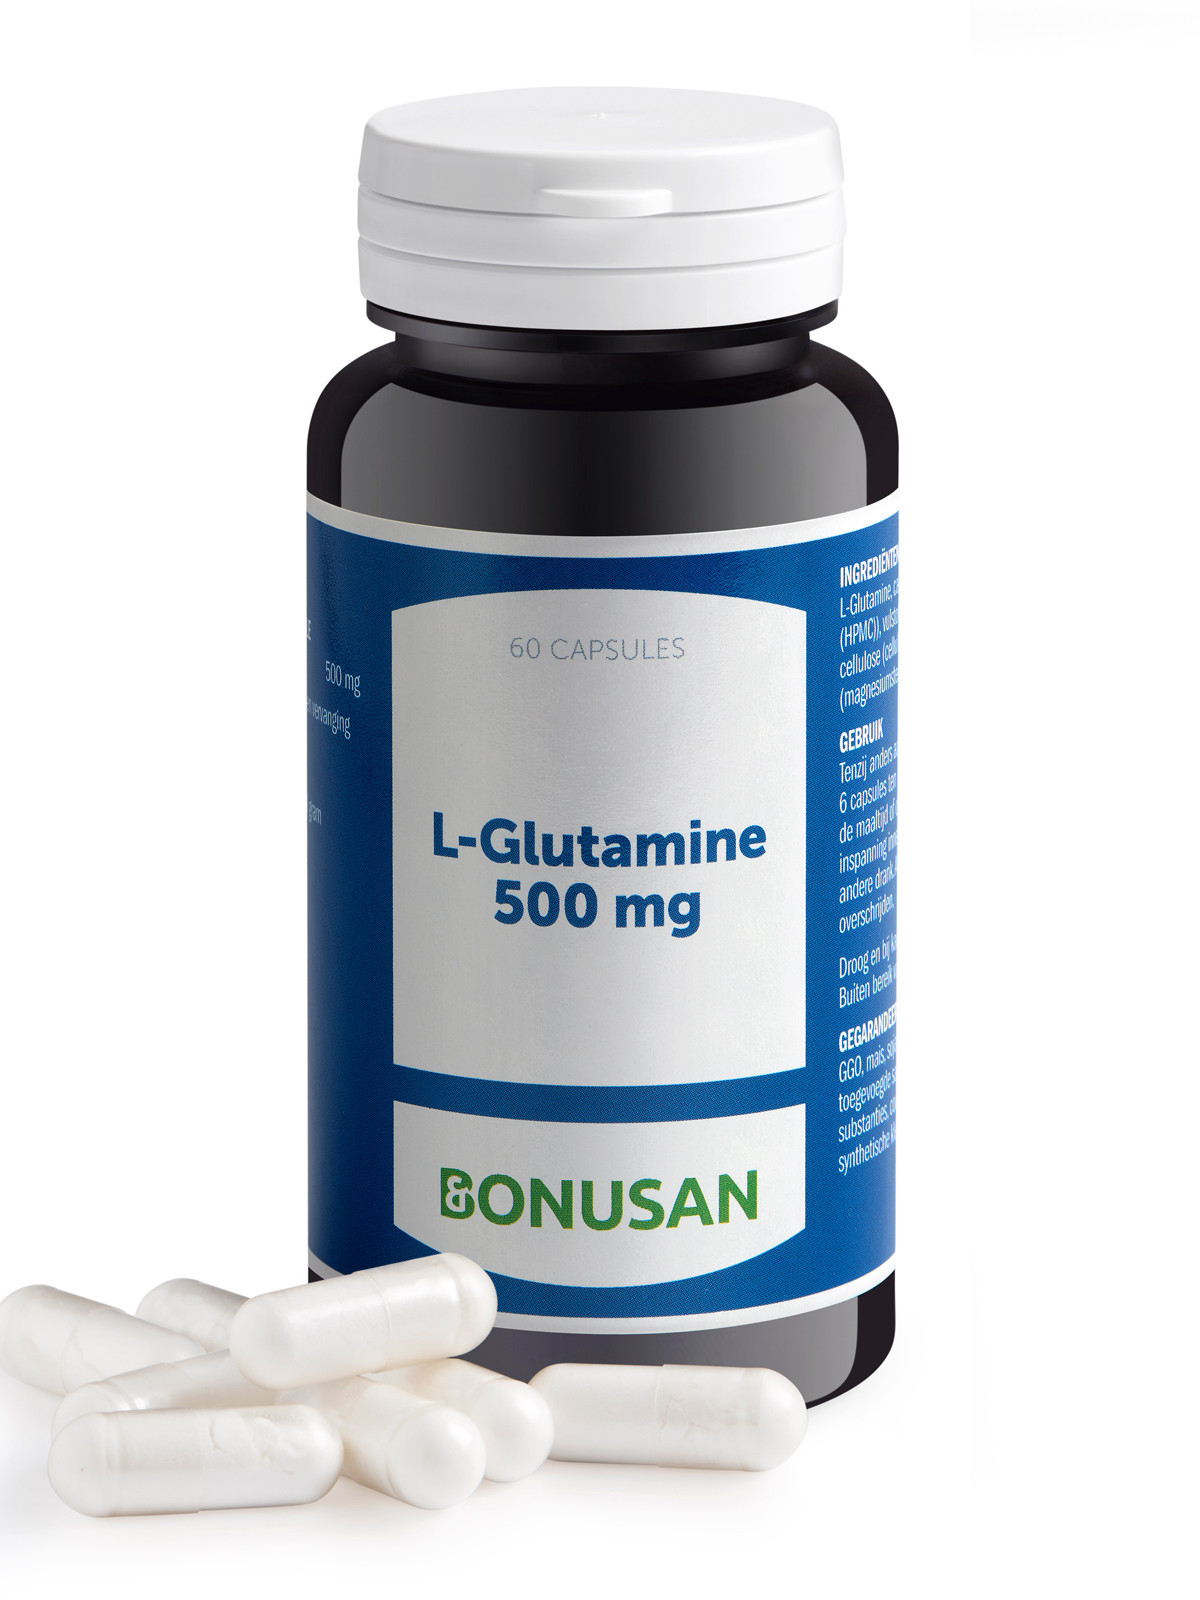 Bonusan - L-Glutamine 500 mg capsules